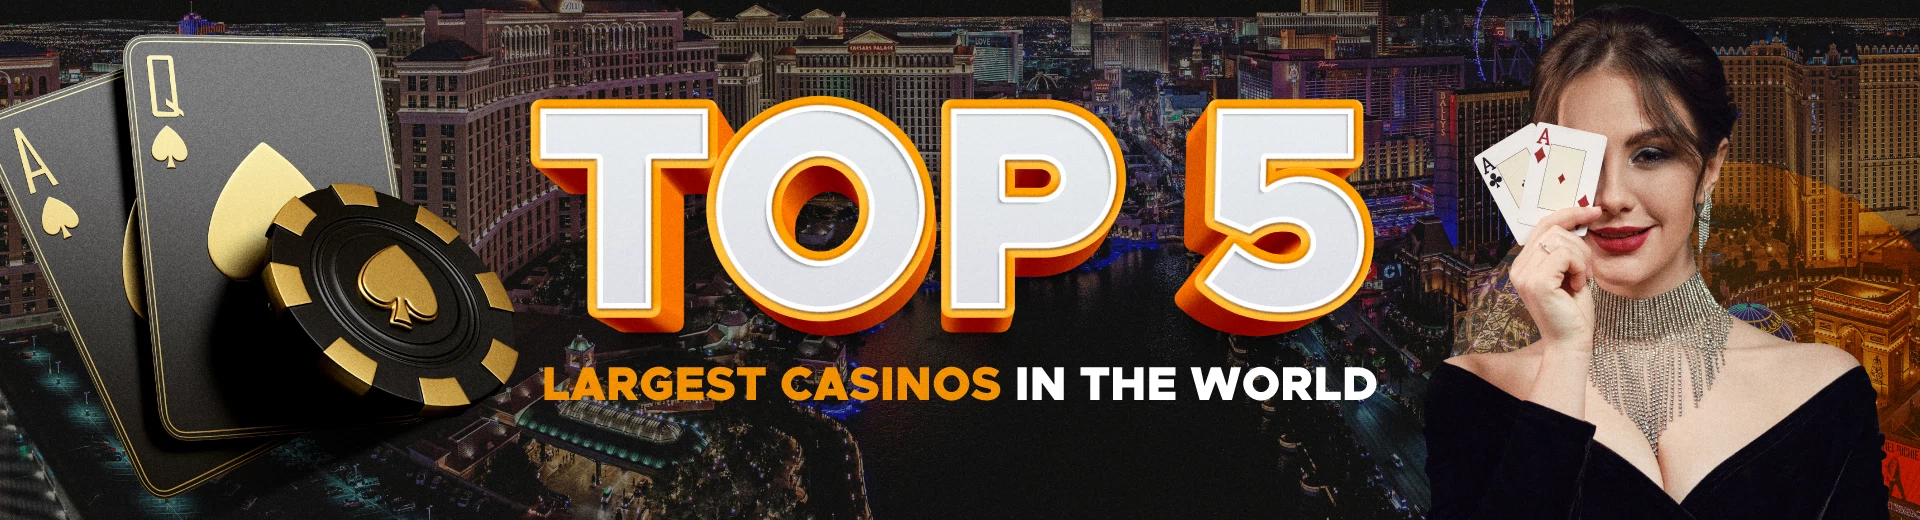 Top 5 Largest Casinos in the World - A Quick Tour - OKBET casino